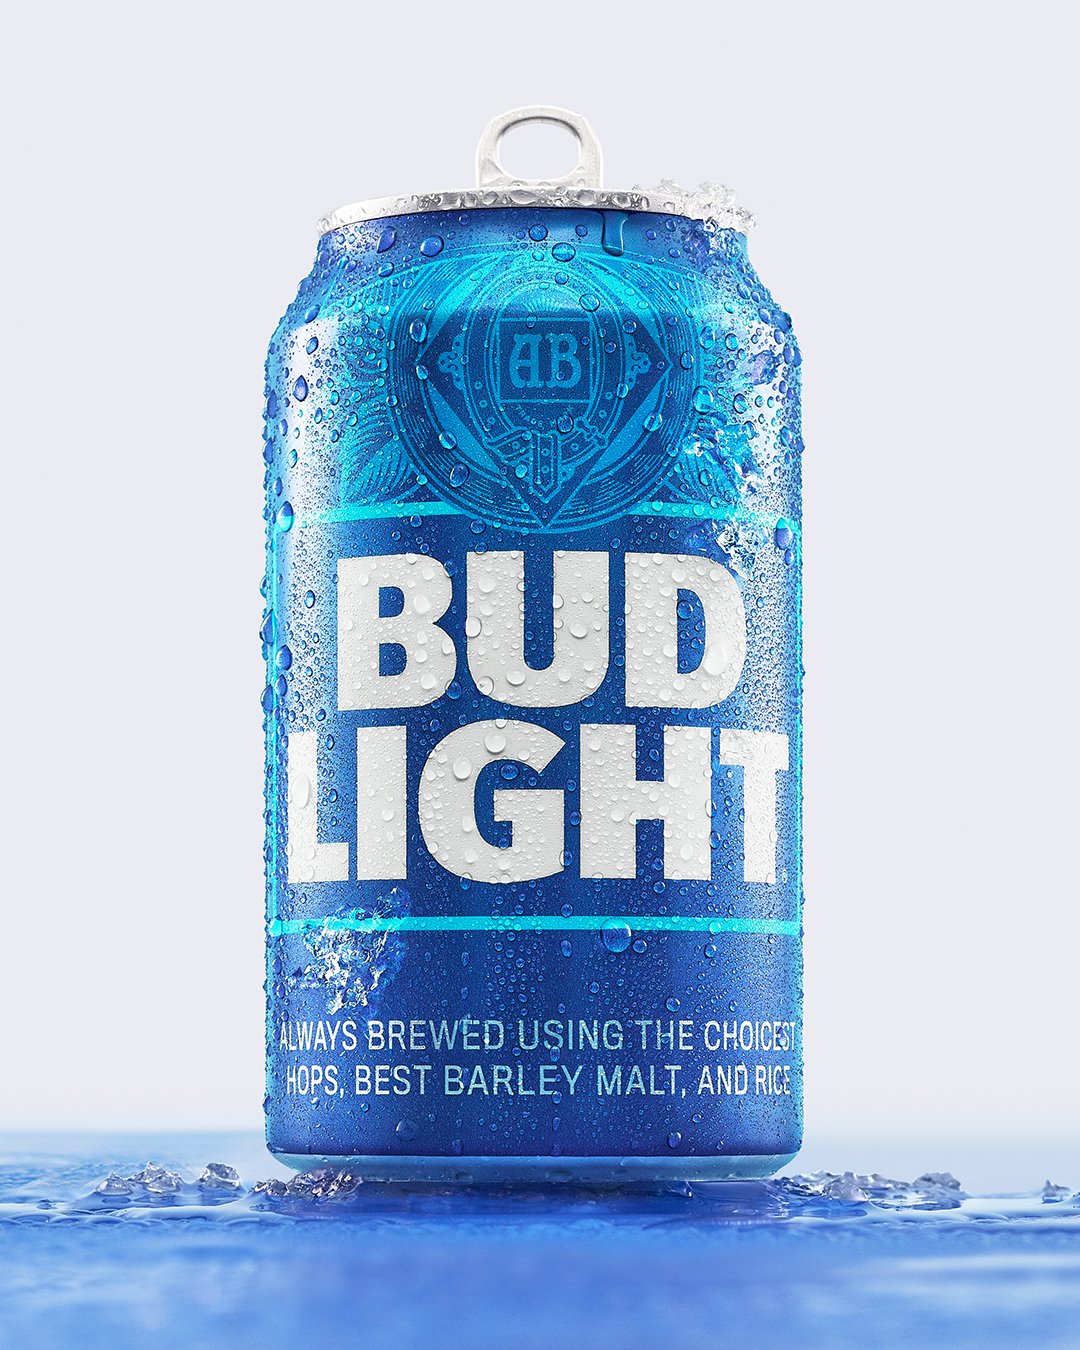 Bud Light is no longer America's top beer following anti-LGBTQ+ pushback